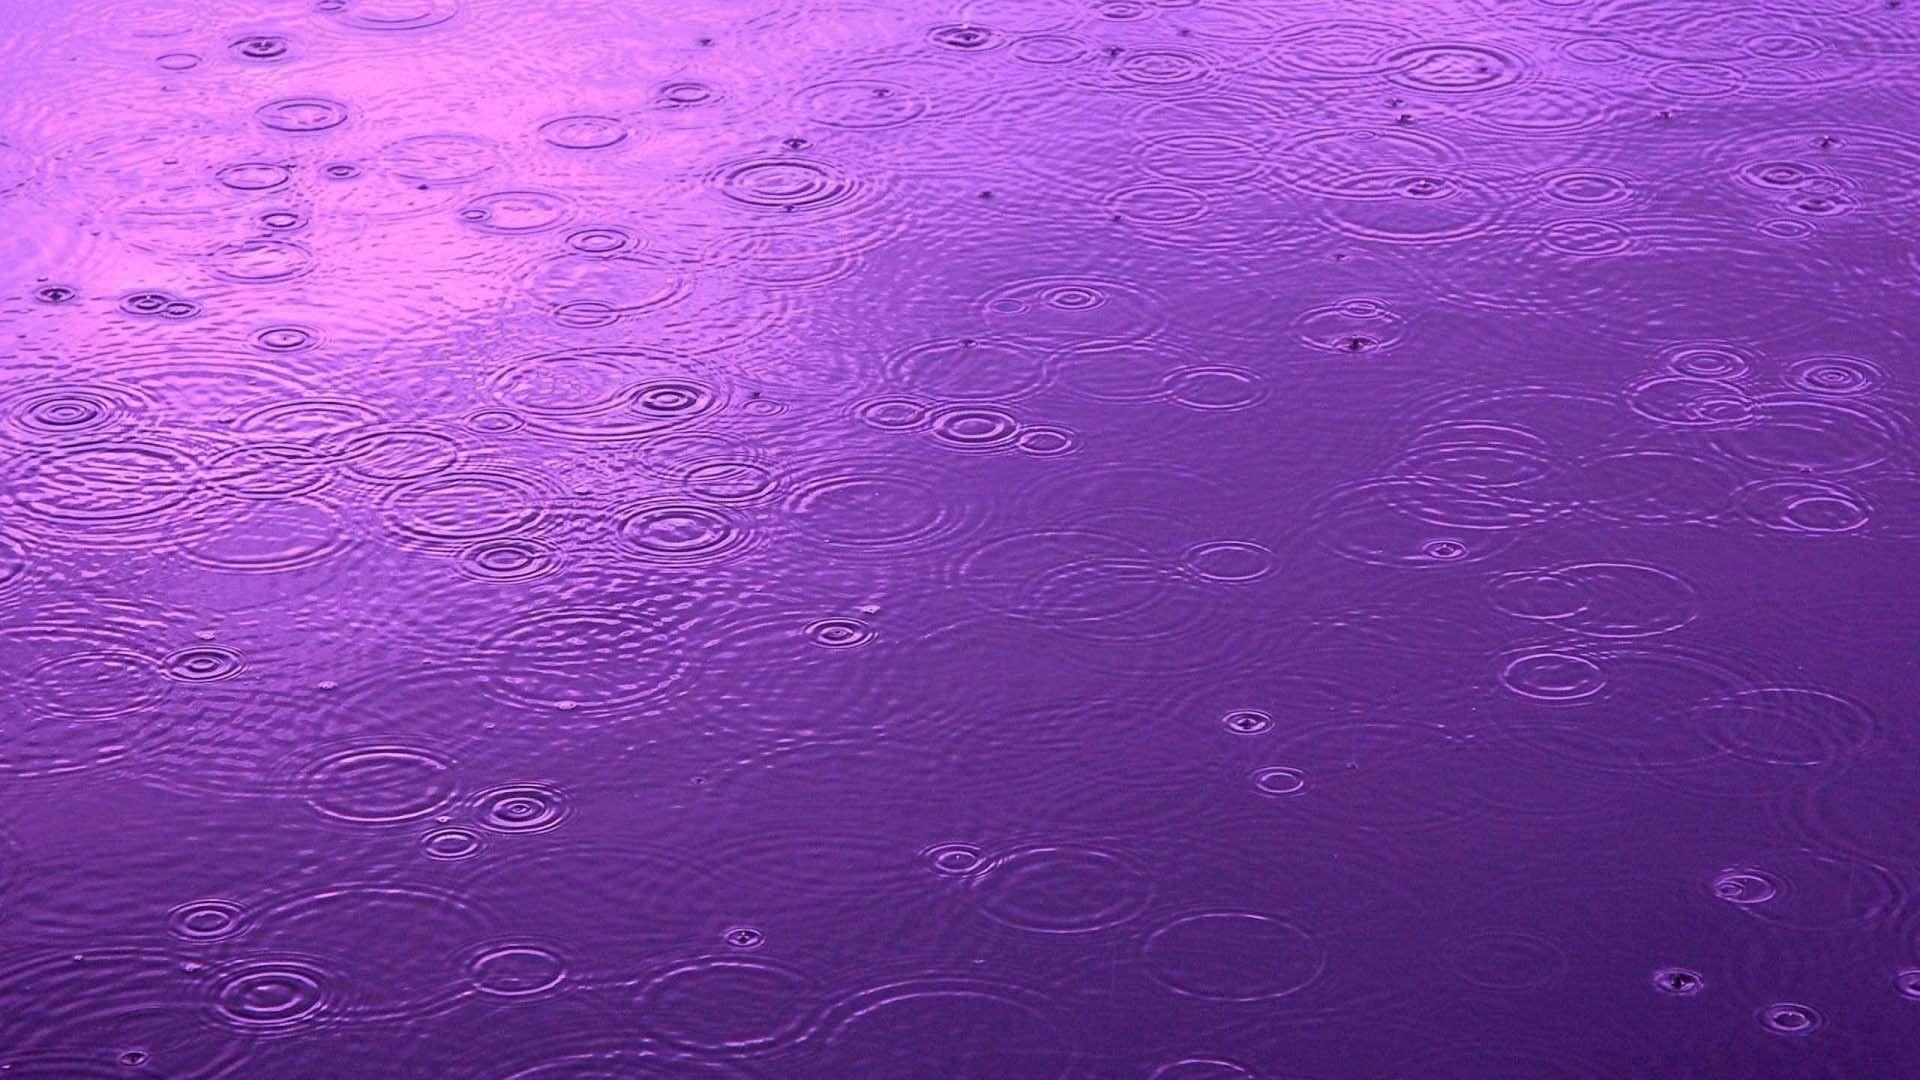 Purple Rain Wallpapers - Top Free Purple Rain Backgrounds ...